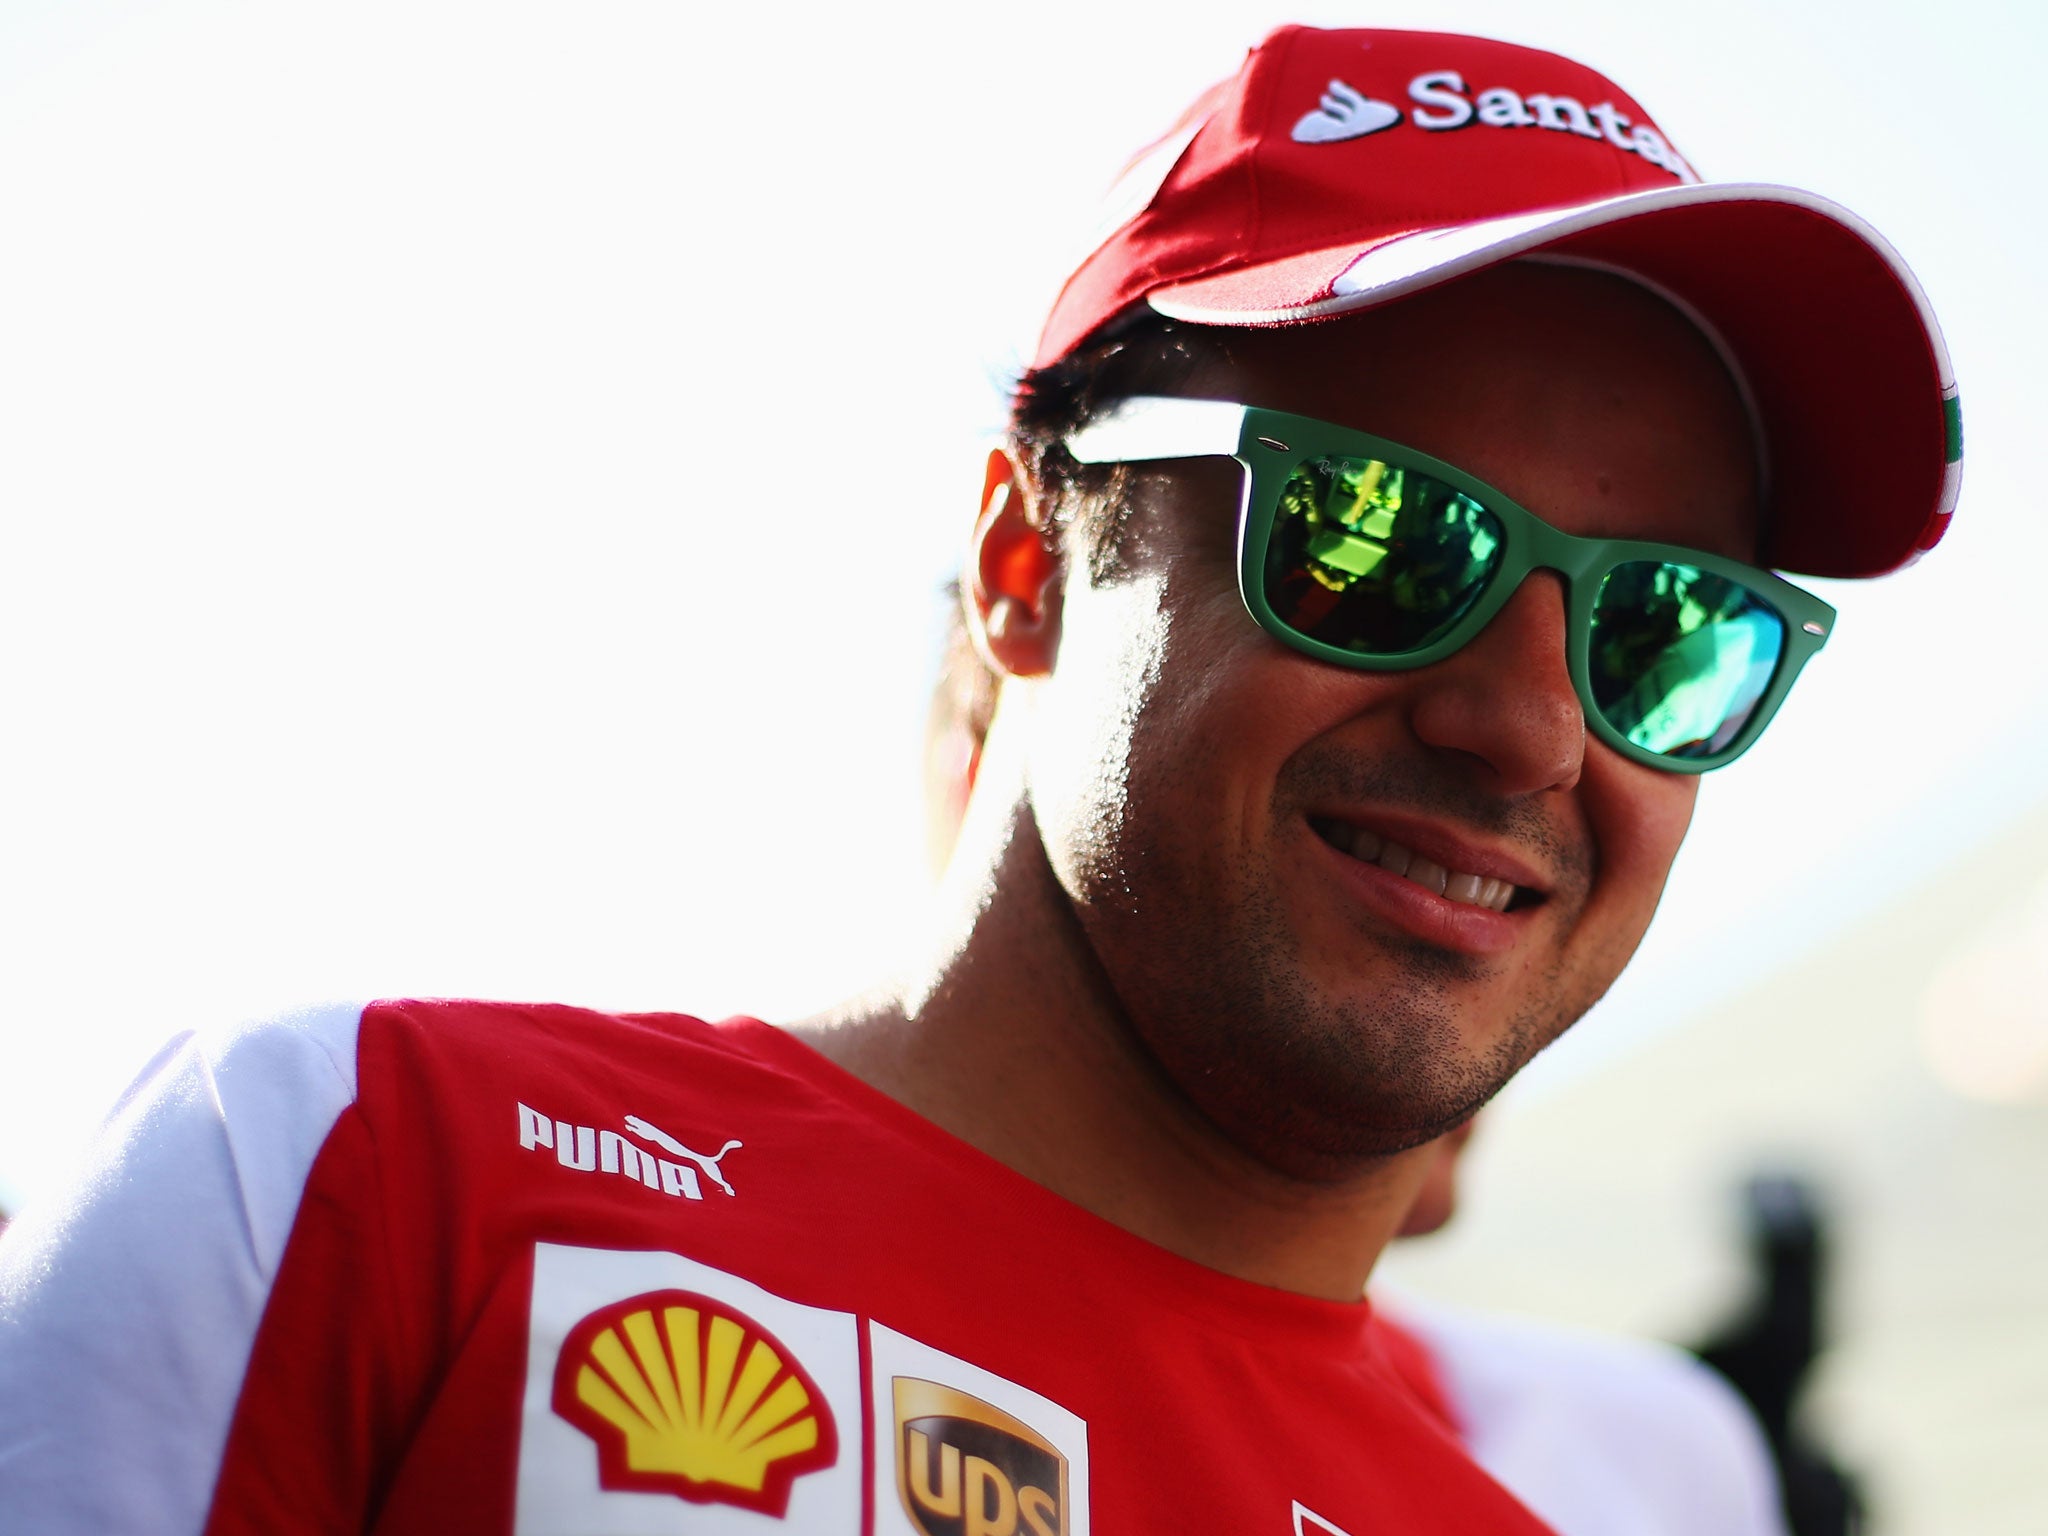 Felipe Massa will leave Ferrari at the end of the season to join Williams